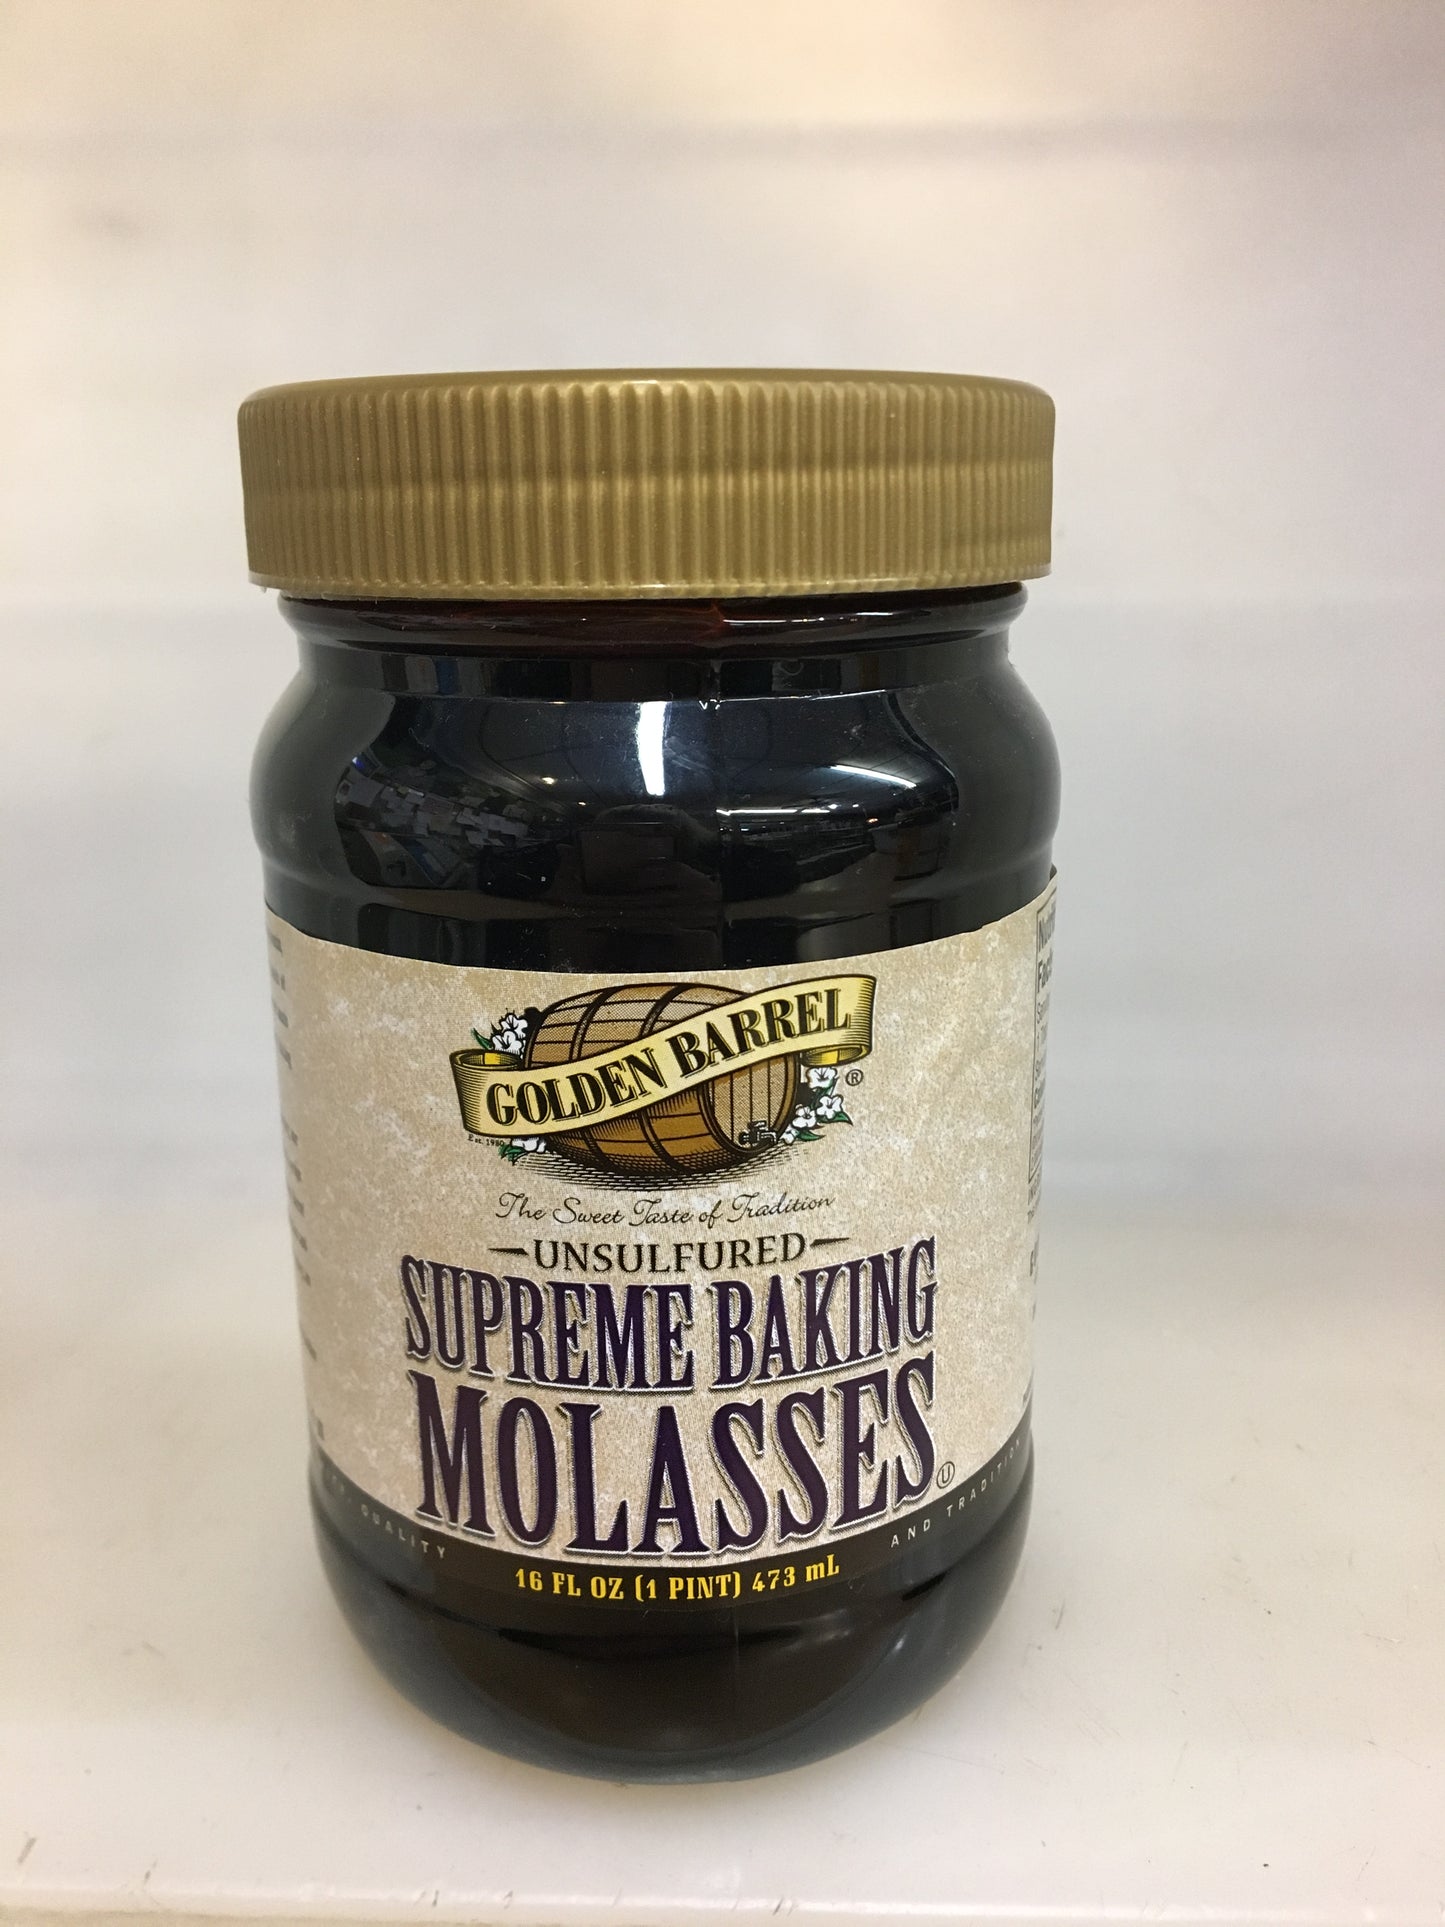 Golden Barrel Supreme Baking Molasses